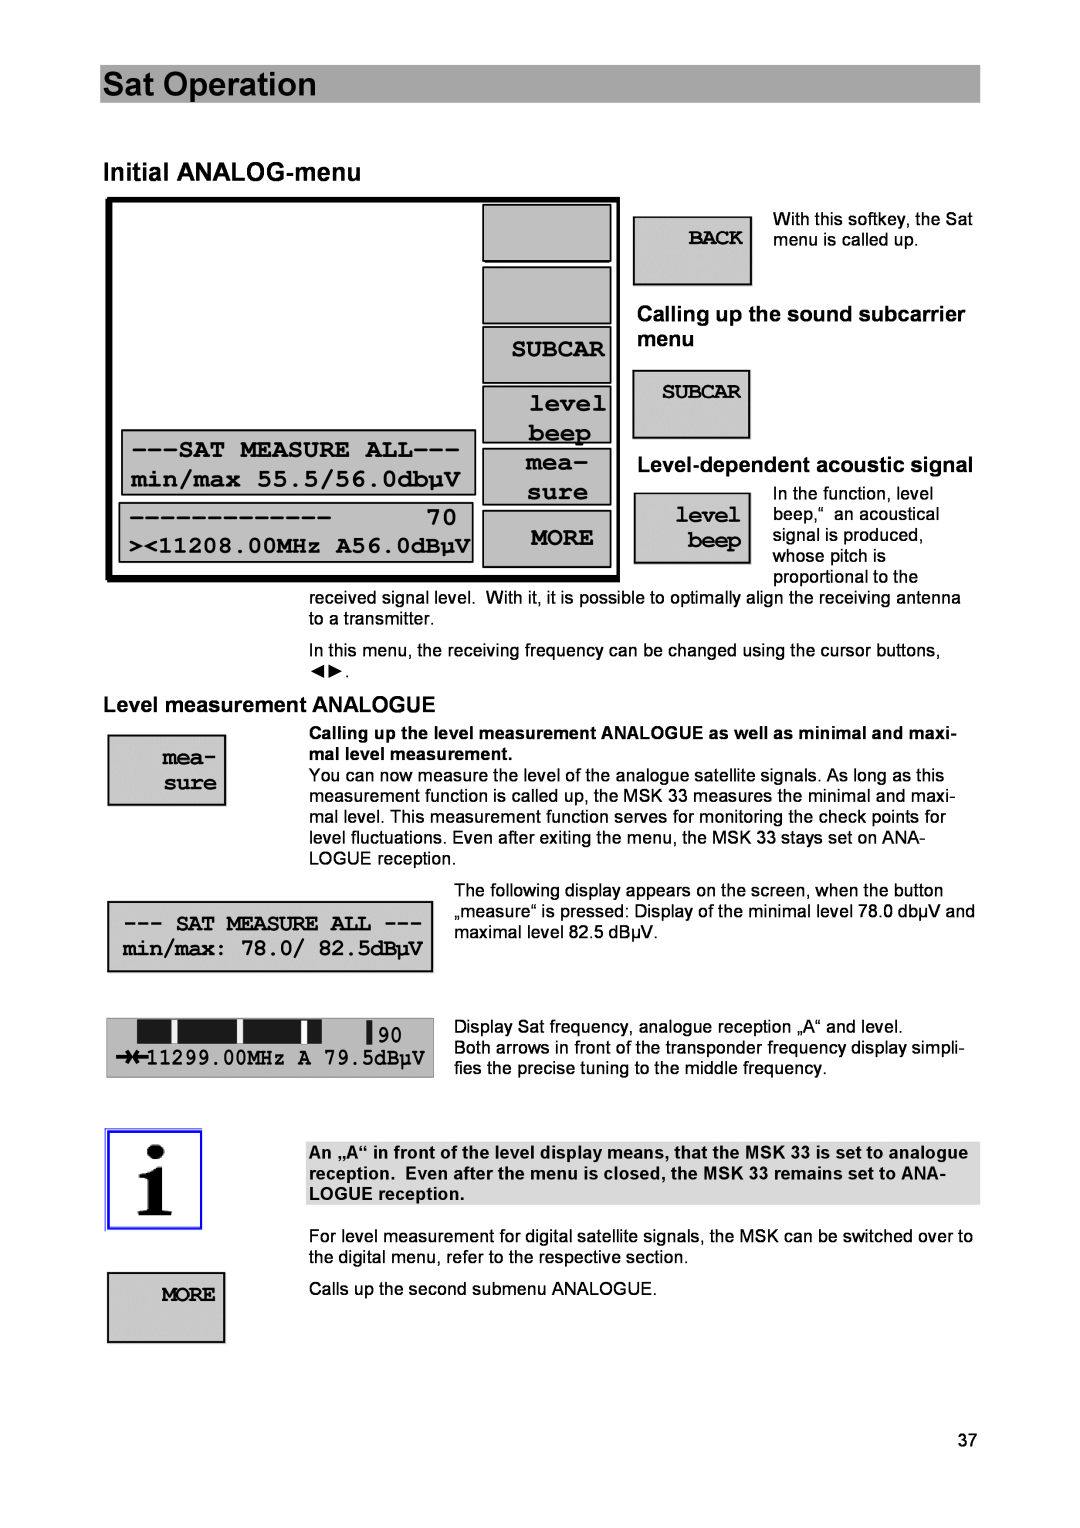 DreamGEAR MSK 33 Initial ANALOG-menu, Subcar, level, beep, Sat Measure All, min/max 55.5/56.0dbµV, More, Sat Operation 